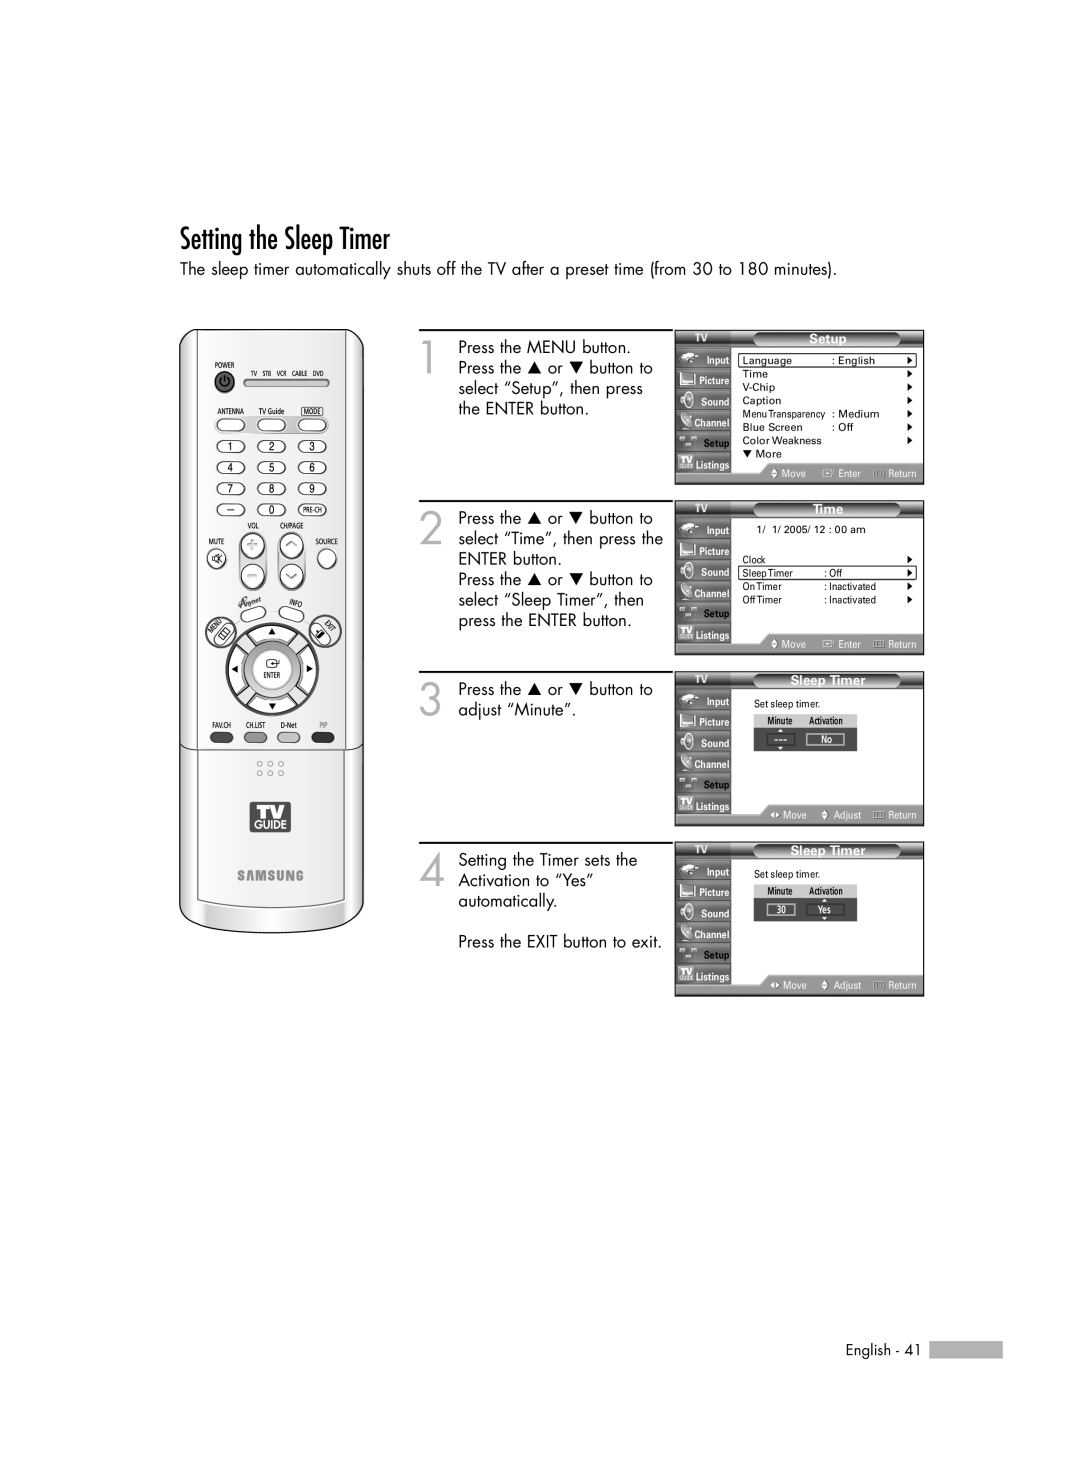 Samsung HL-R5688W manual Setting the Sleep Timer, Minute 